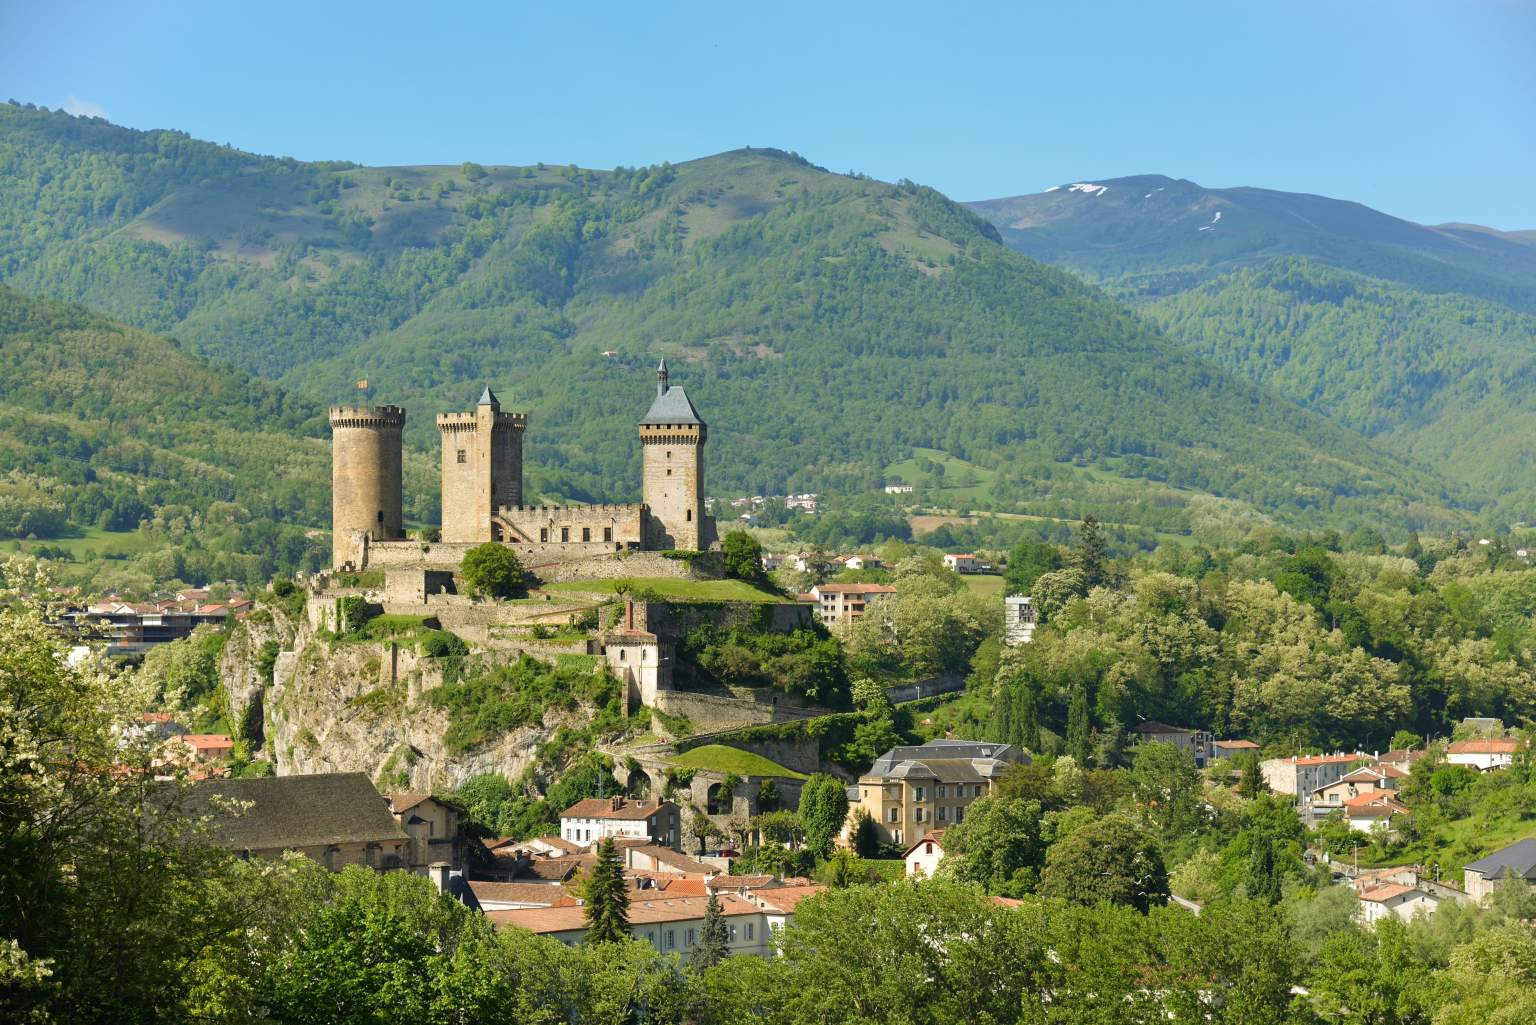 La ciudad de Carcassonne, Turismo Pays Cathare 
<div><div class="gtx-trans-icon"> </div></div>